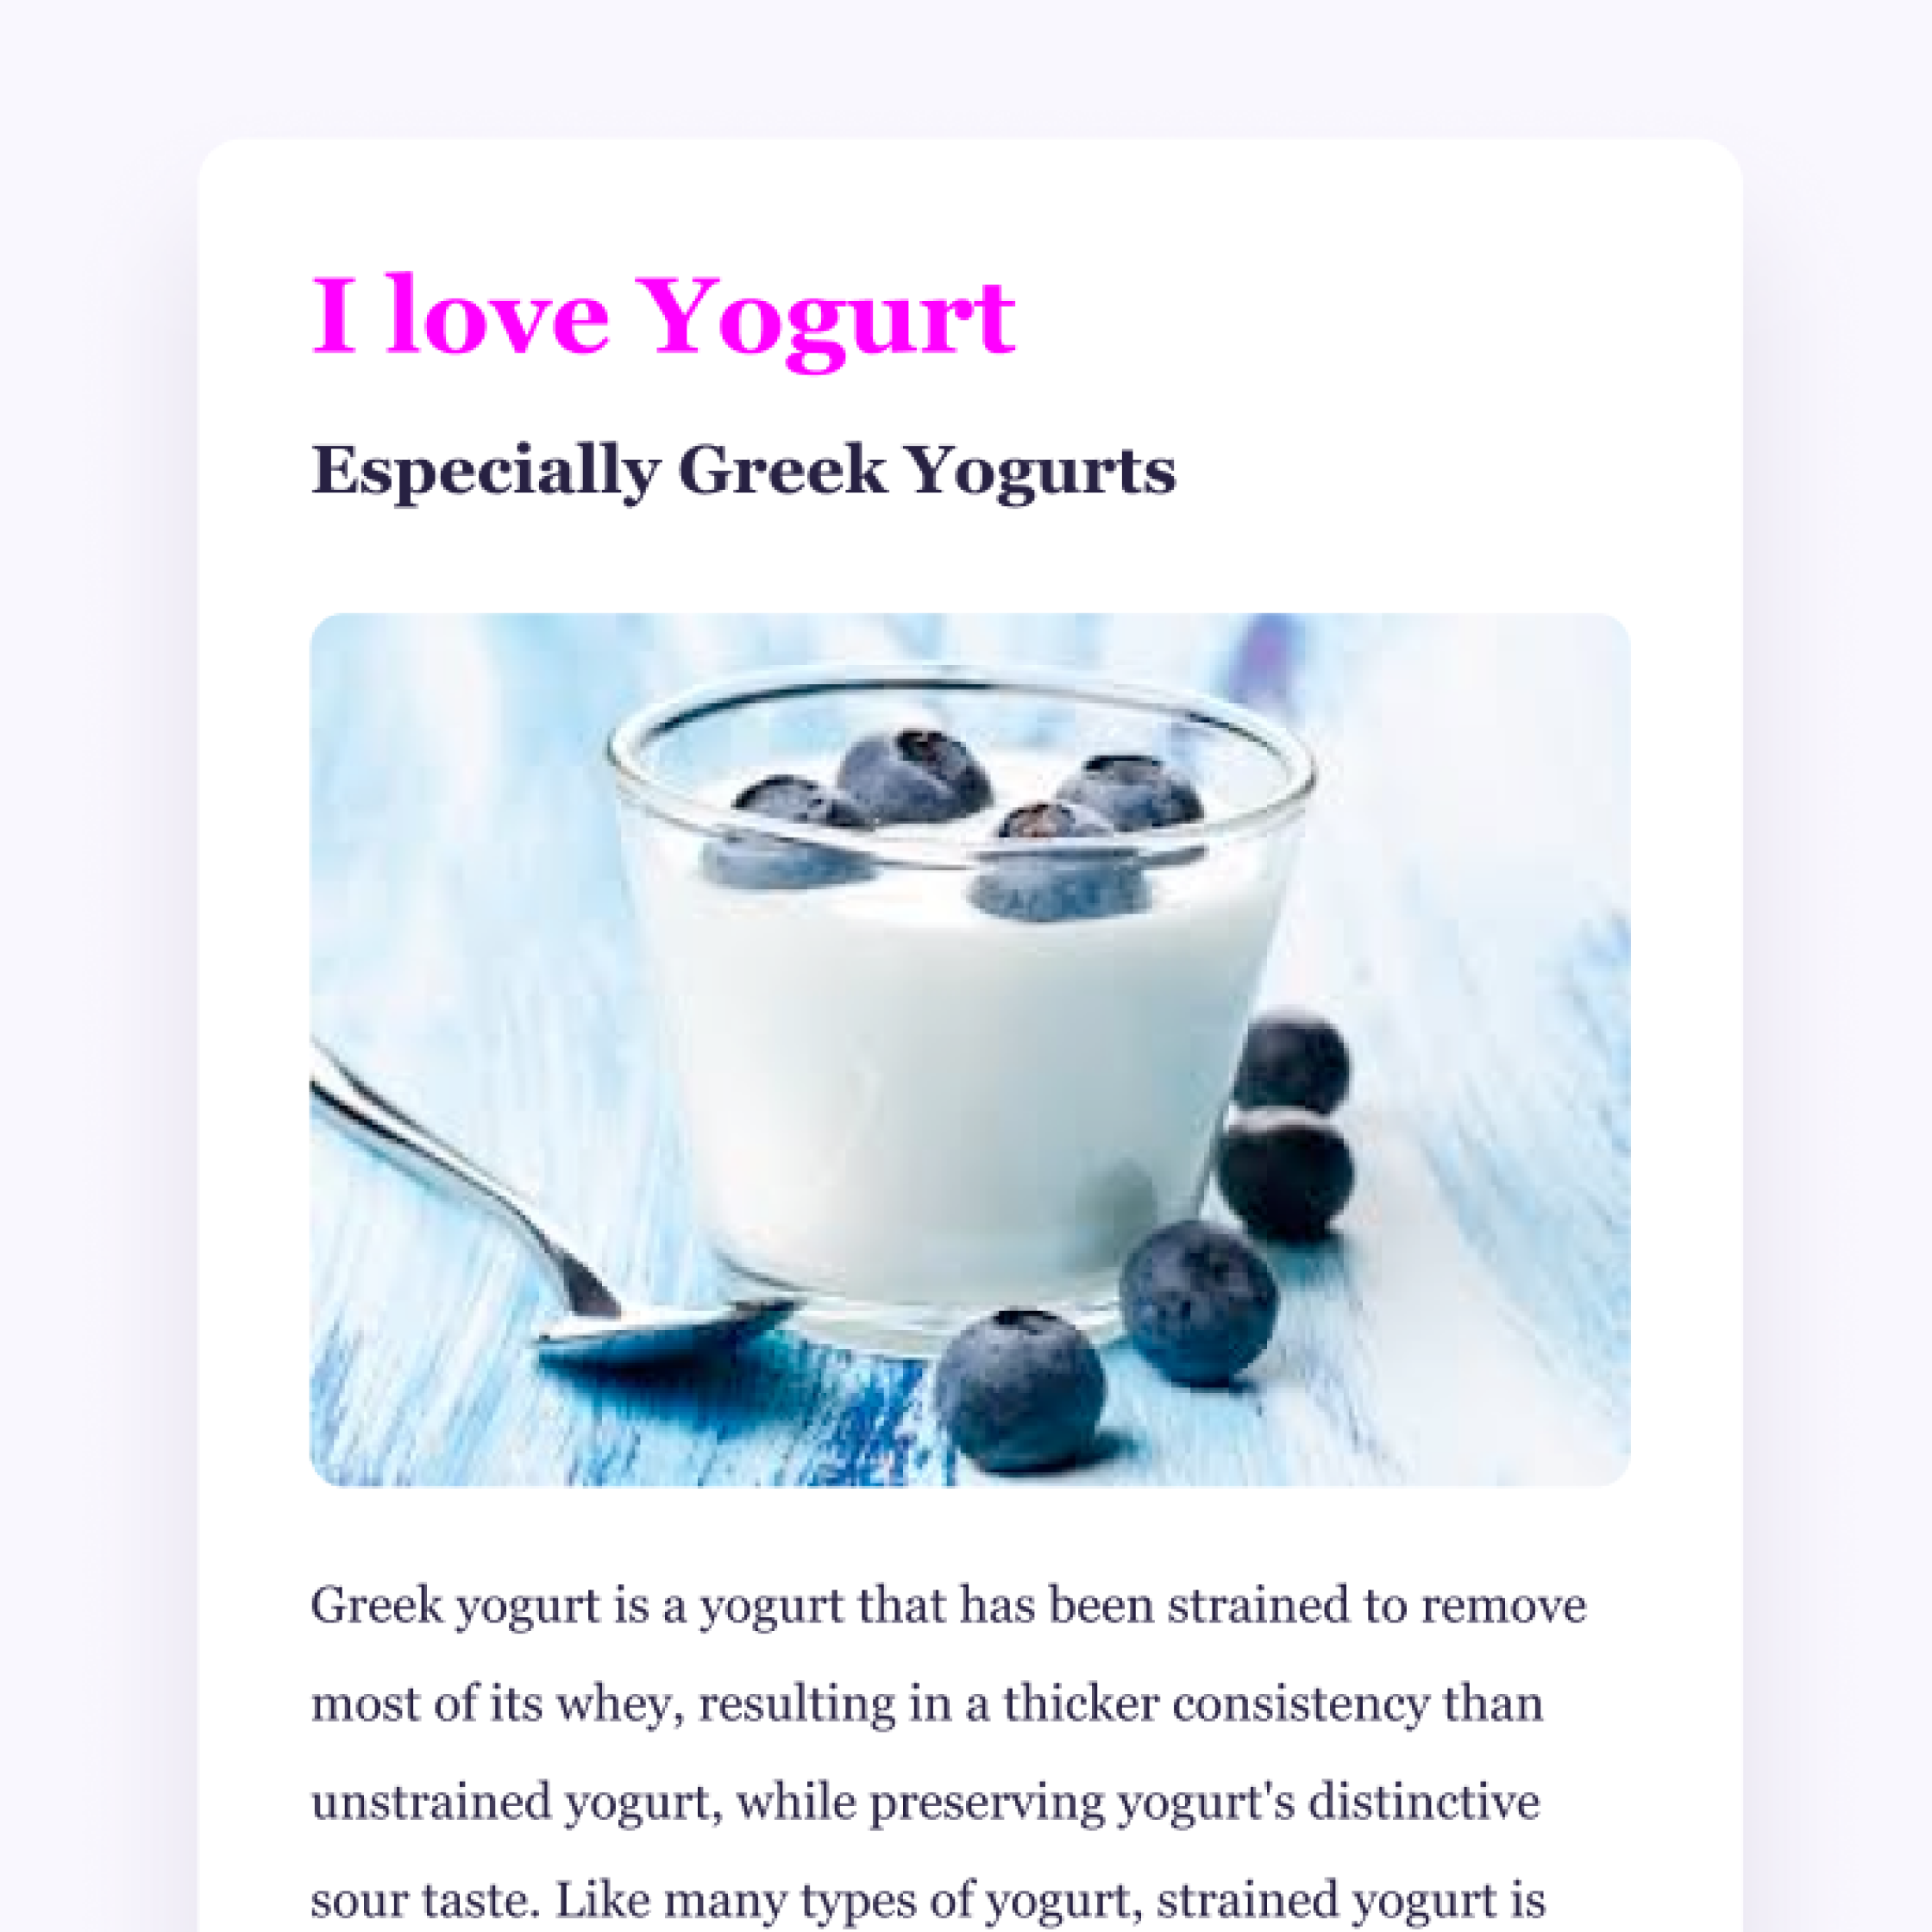 An image of yogurt app project